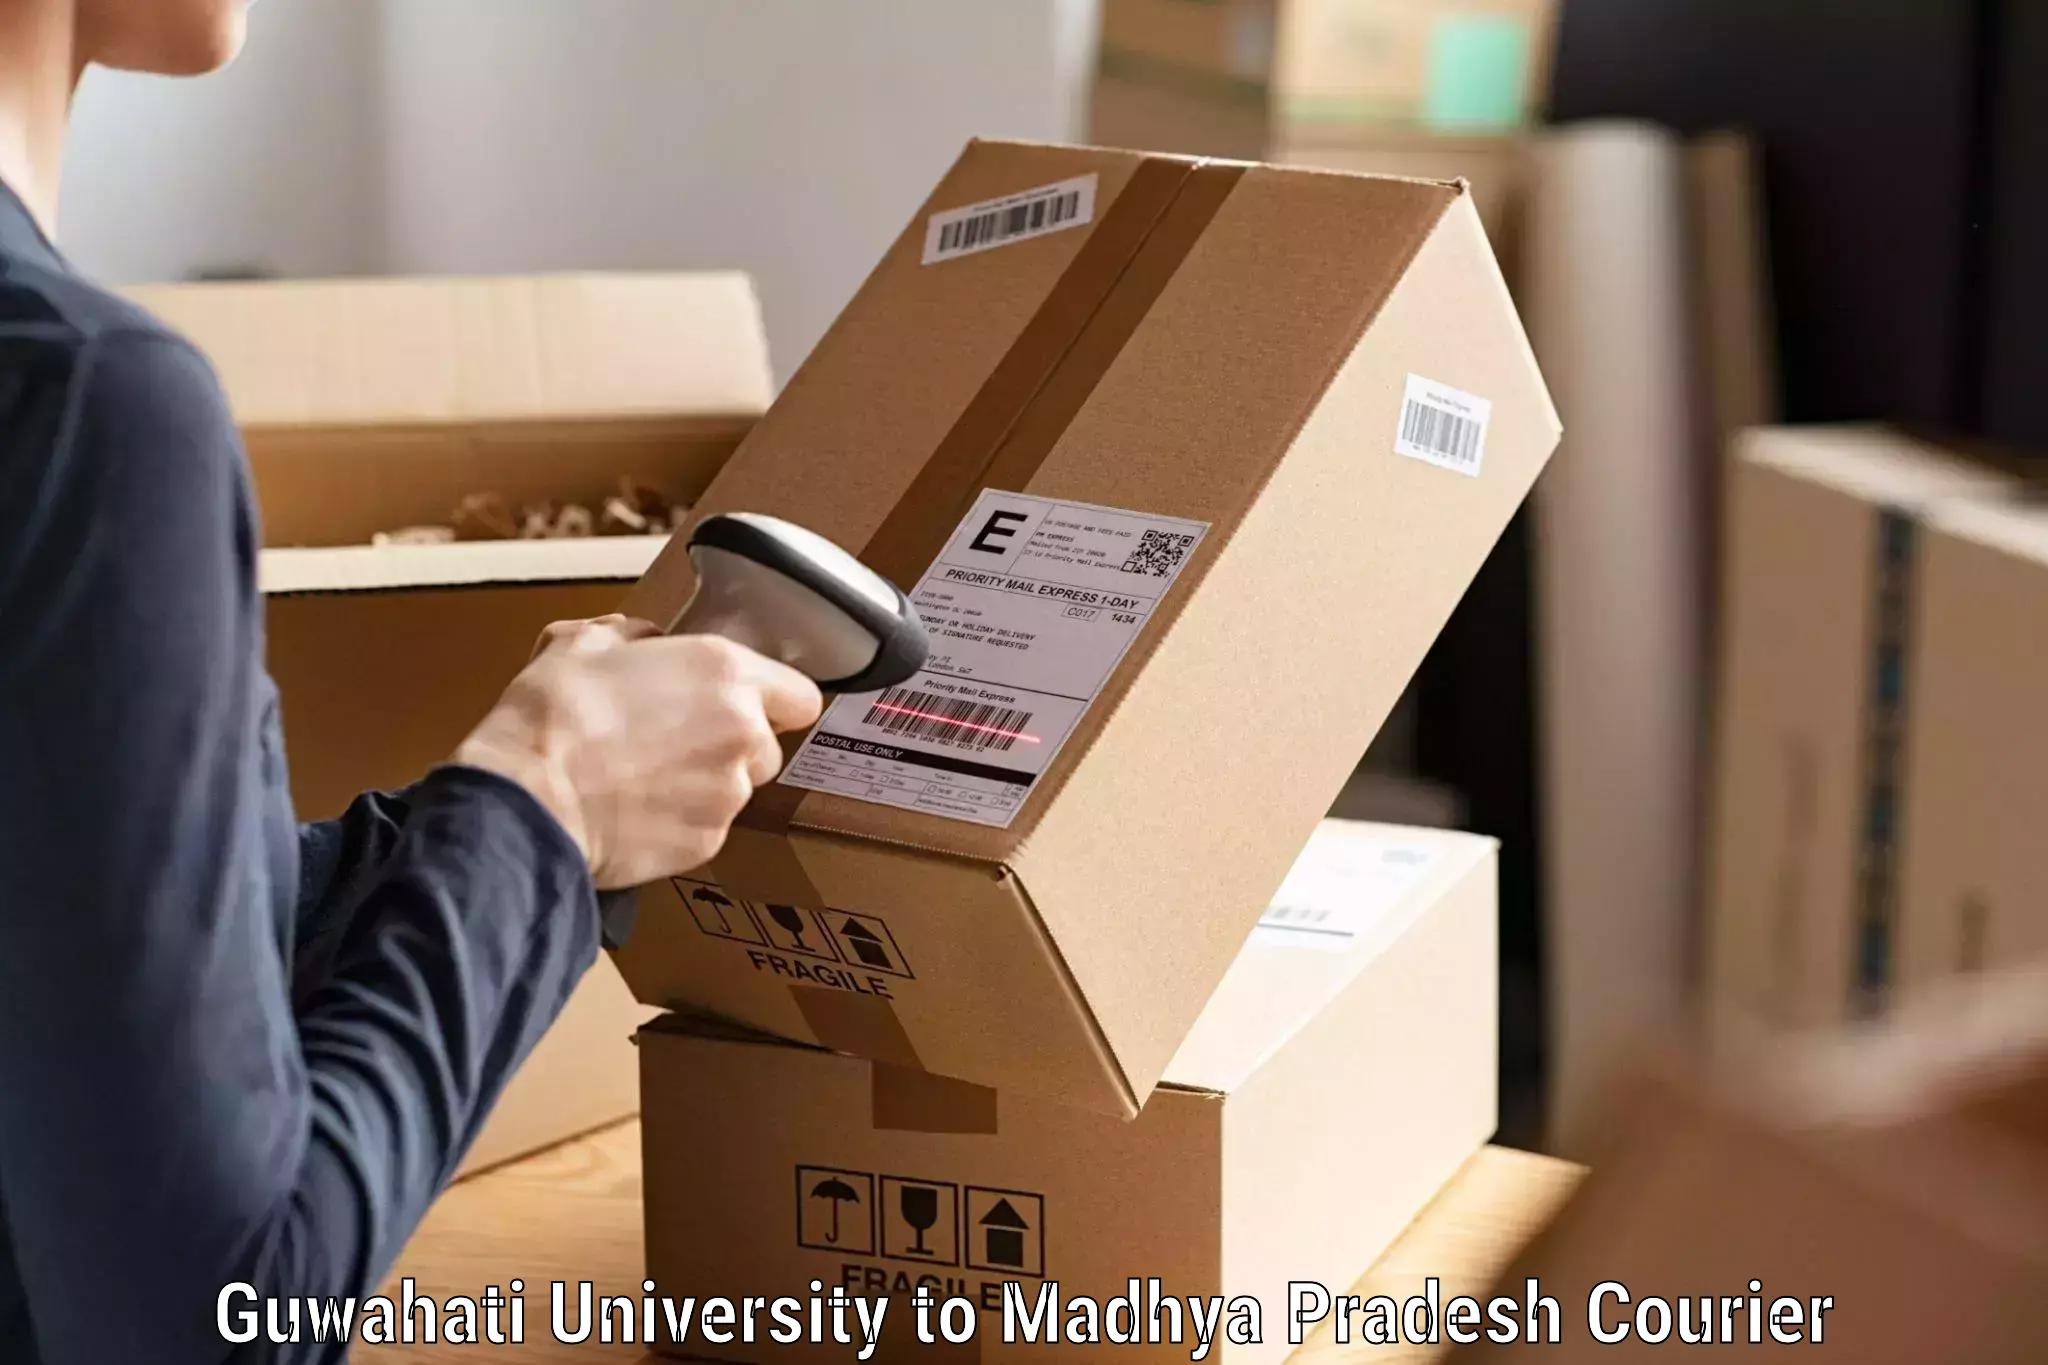 Professional courier services Guwahati University to Amarwara